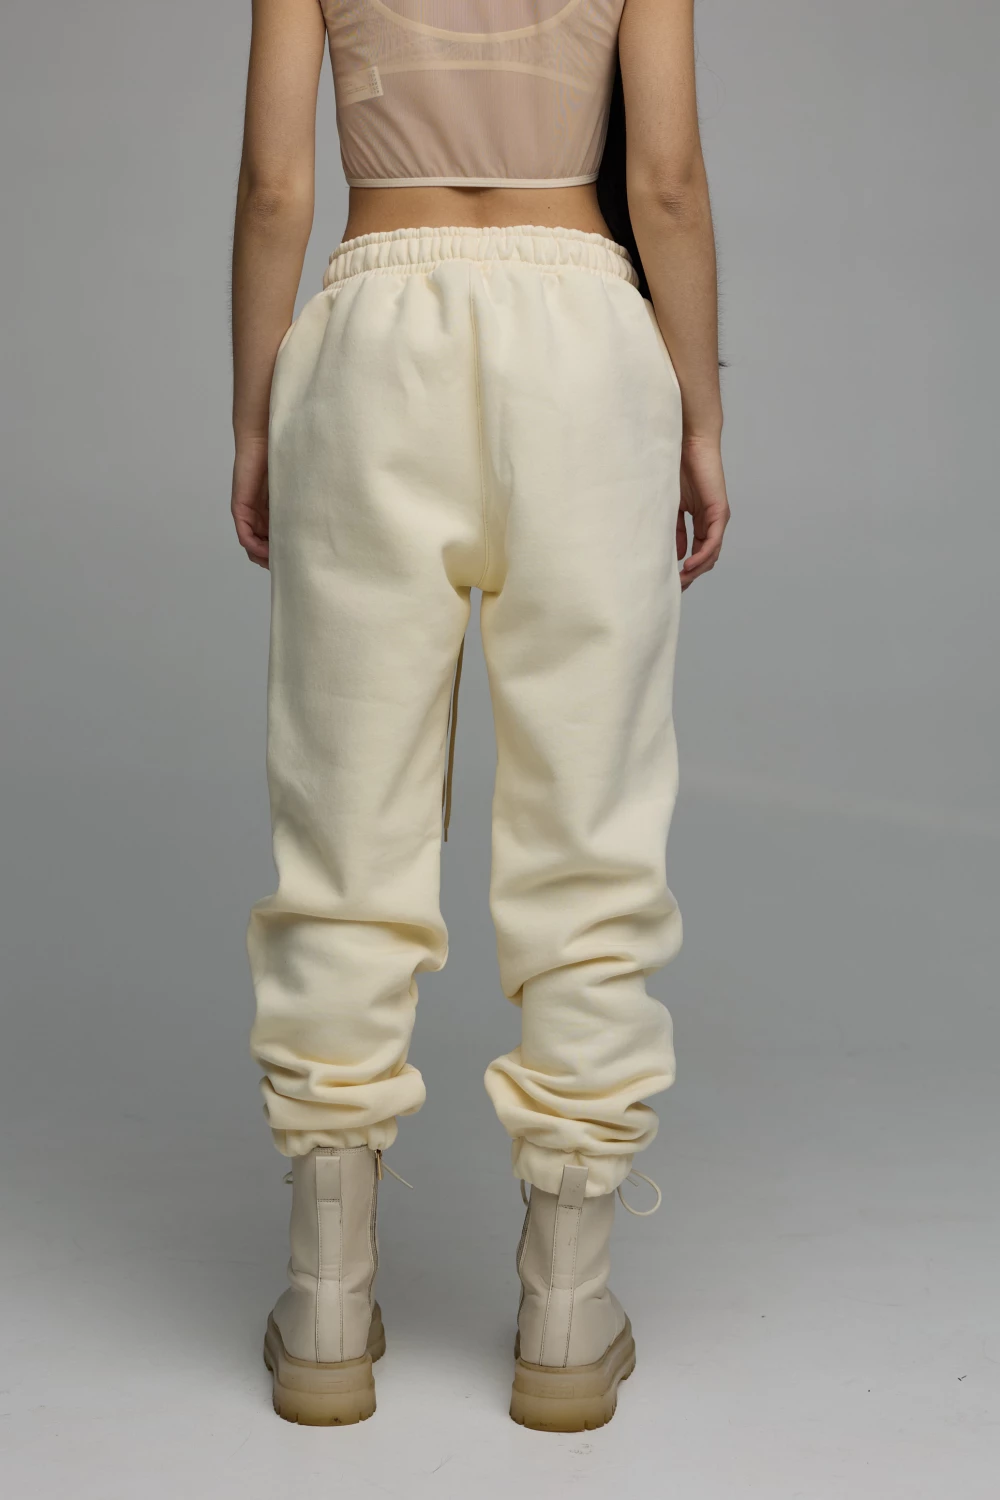 unisex warmed pants in vanilla color